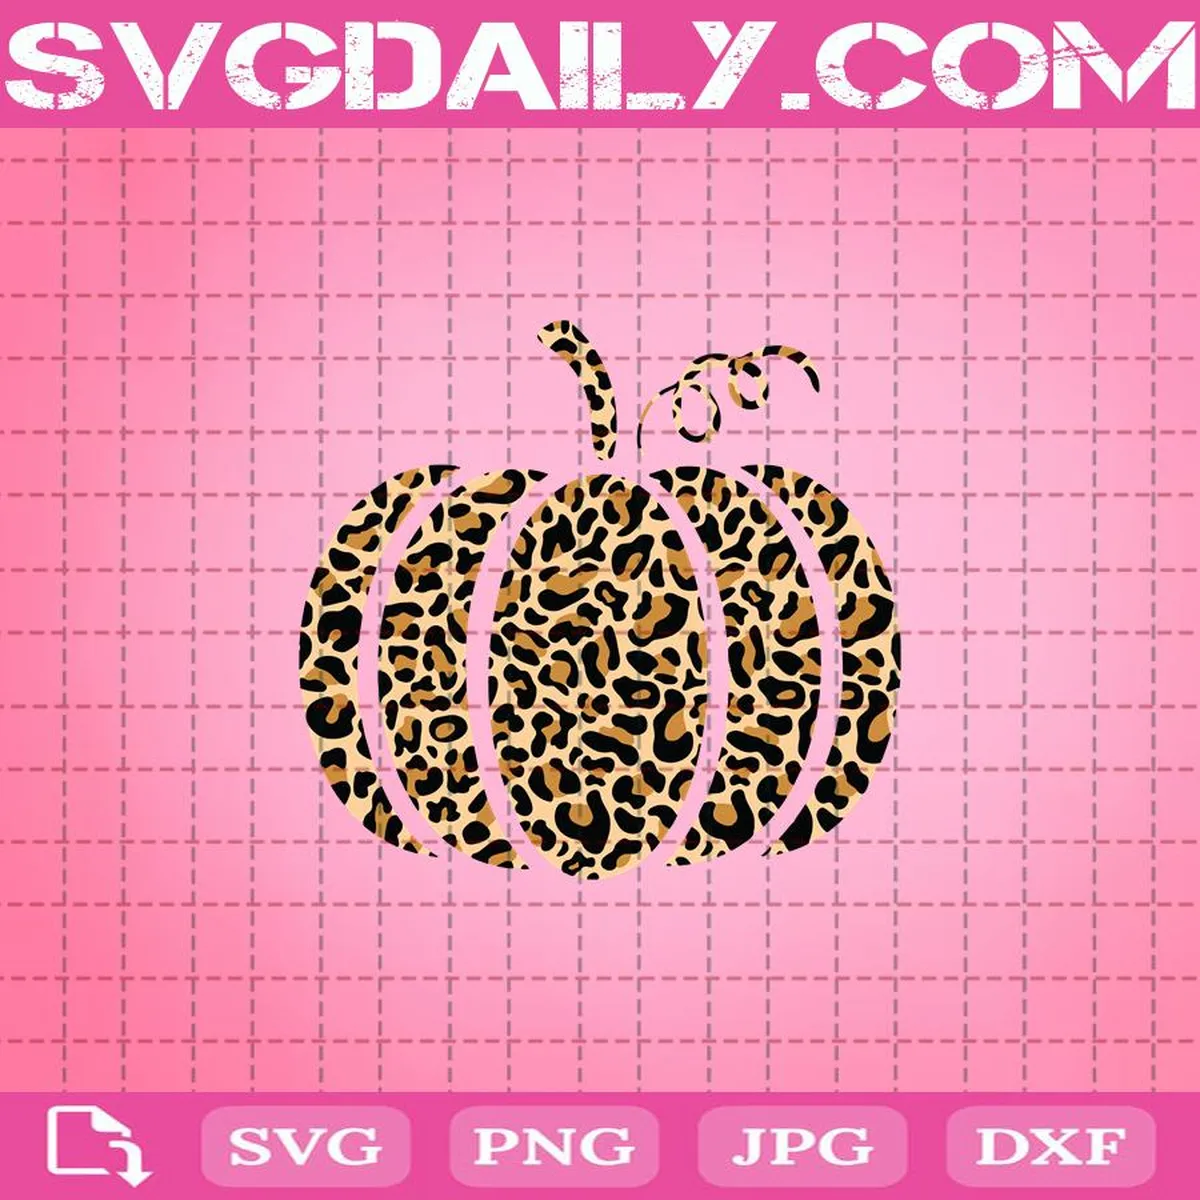 Leopard Pumpkin Svg, Pumpkin Leopard Svg, Pumpkin Svg, Cricut Digital Download, Instant Download